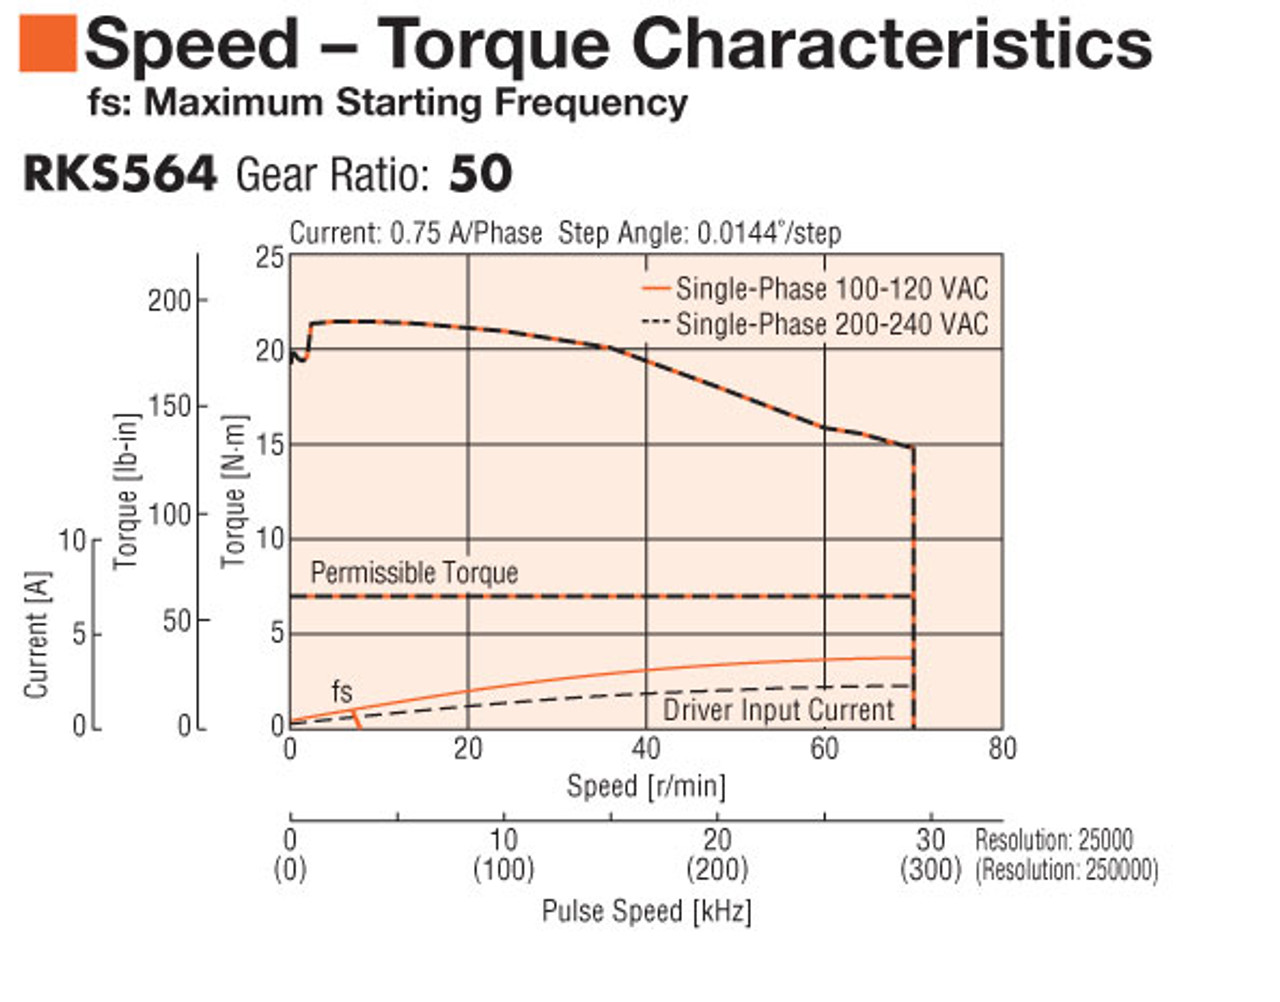 PKE564AC-HS50 - Speed-Torque